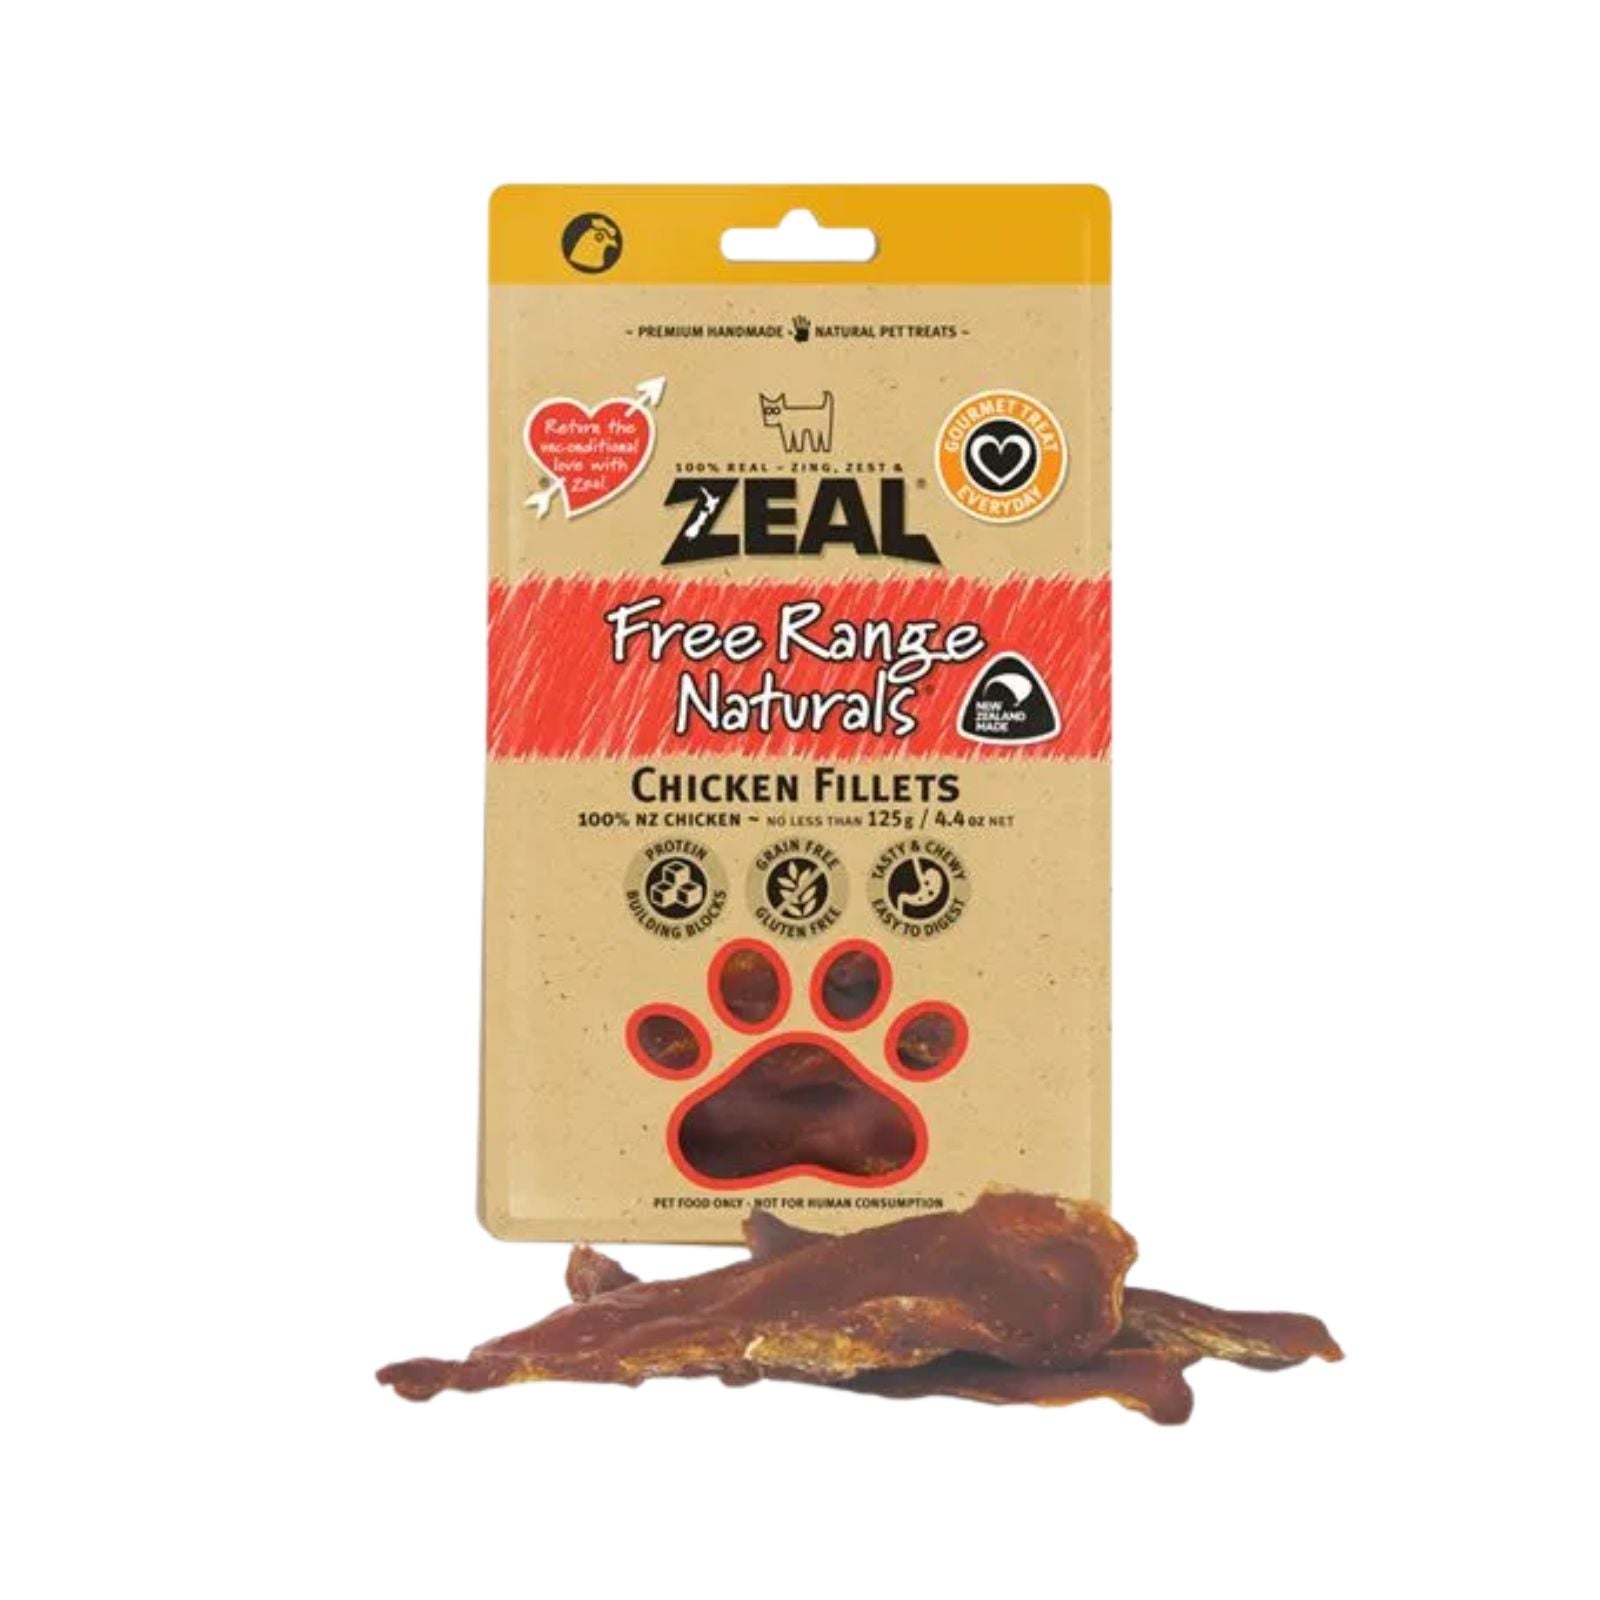 125g pack of ZEAL Free Range Naturals Chicken Fillets Dog Treats